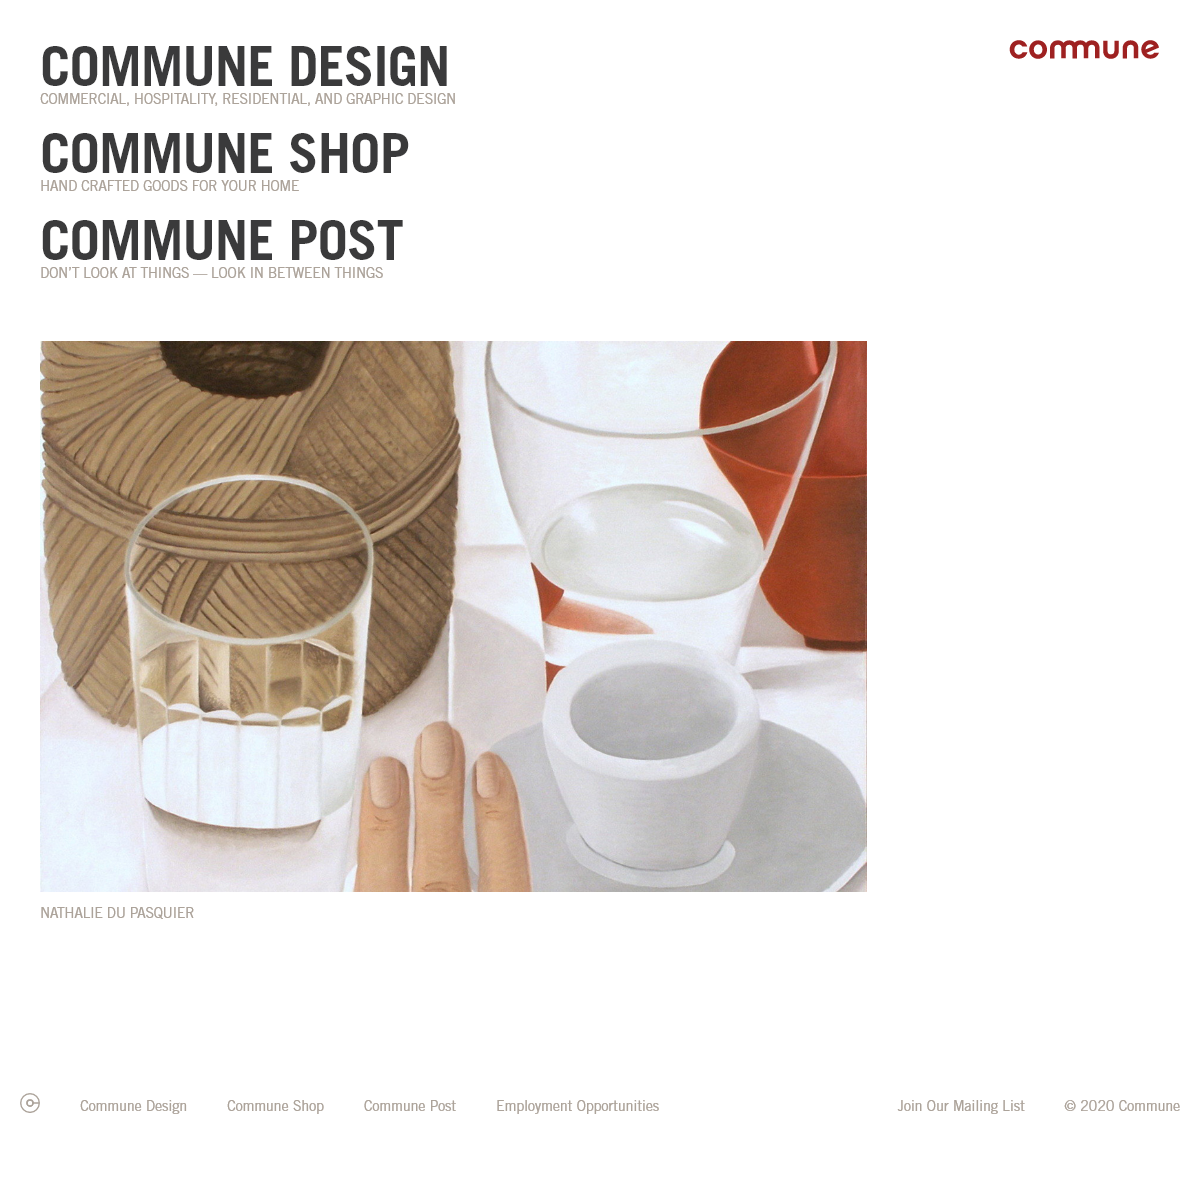 A complete backup of communedesign.com